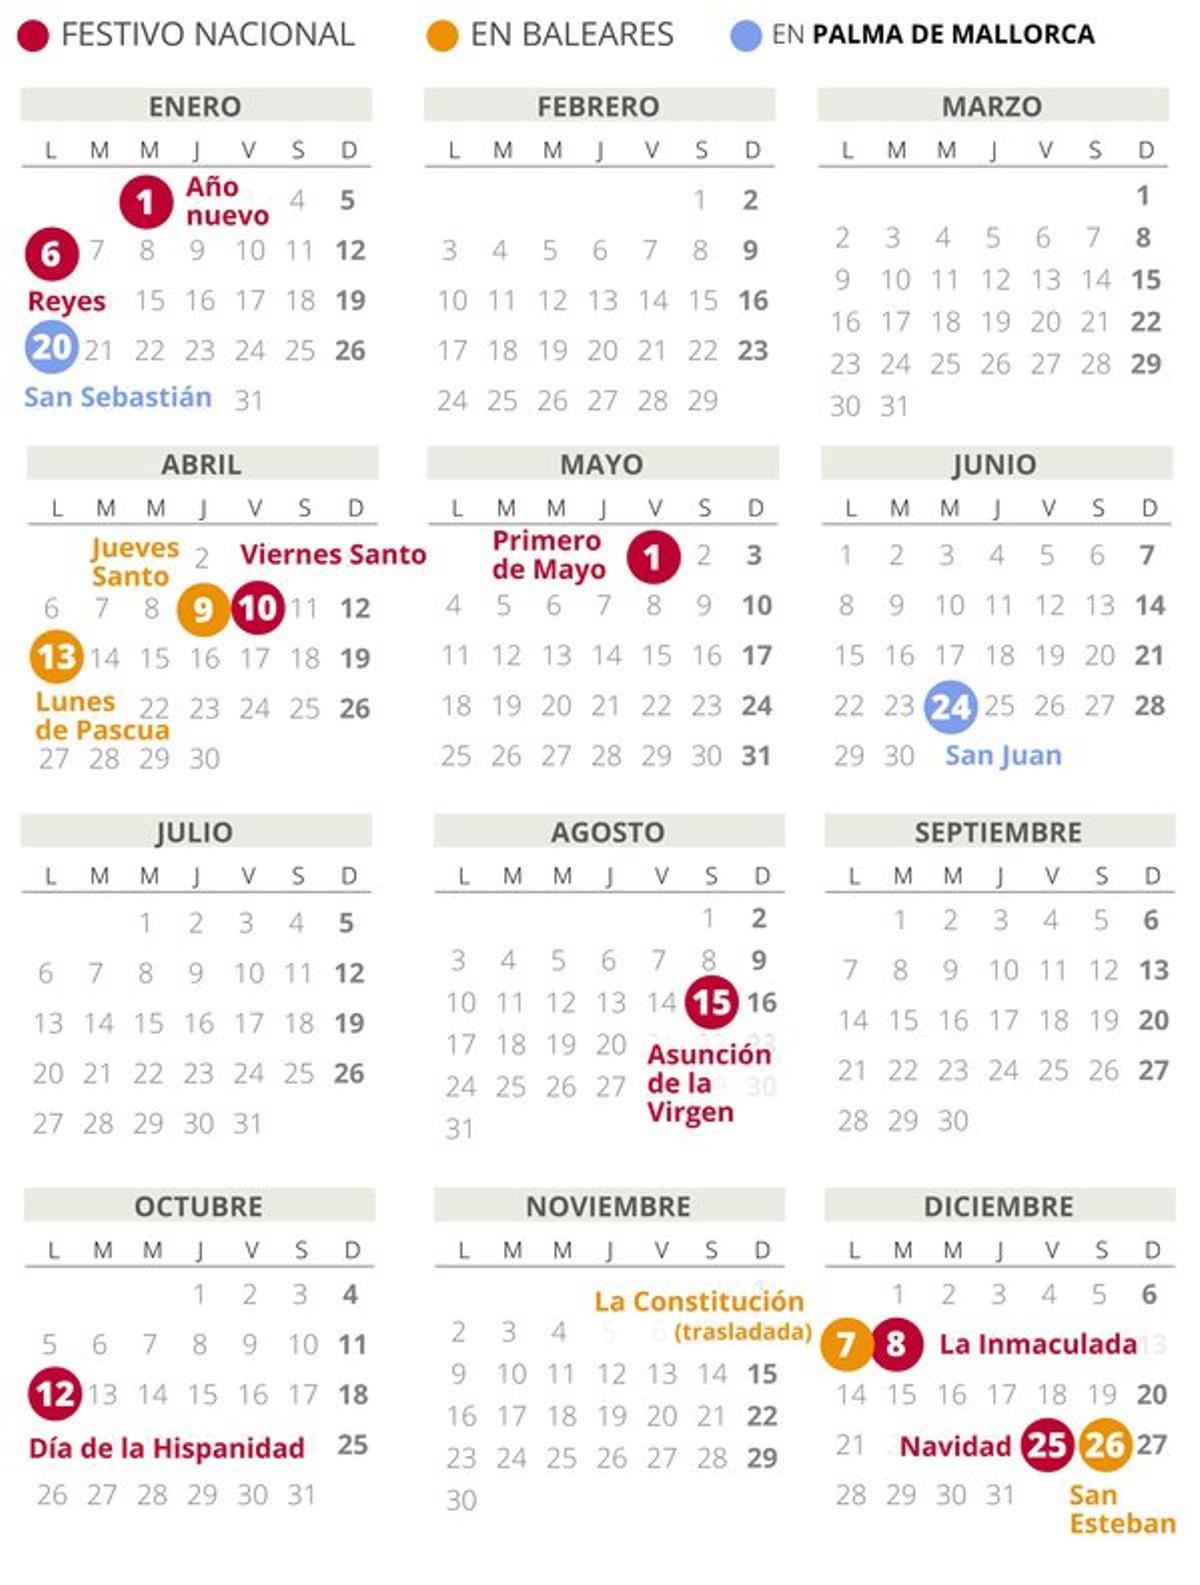 Calendario laboral de Palma de Mallorca del 2020.